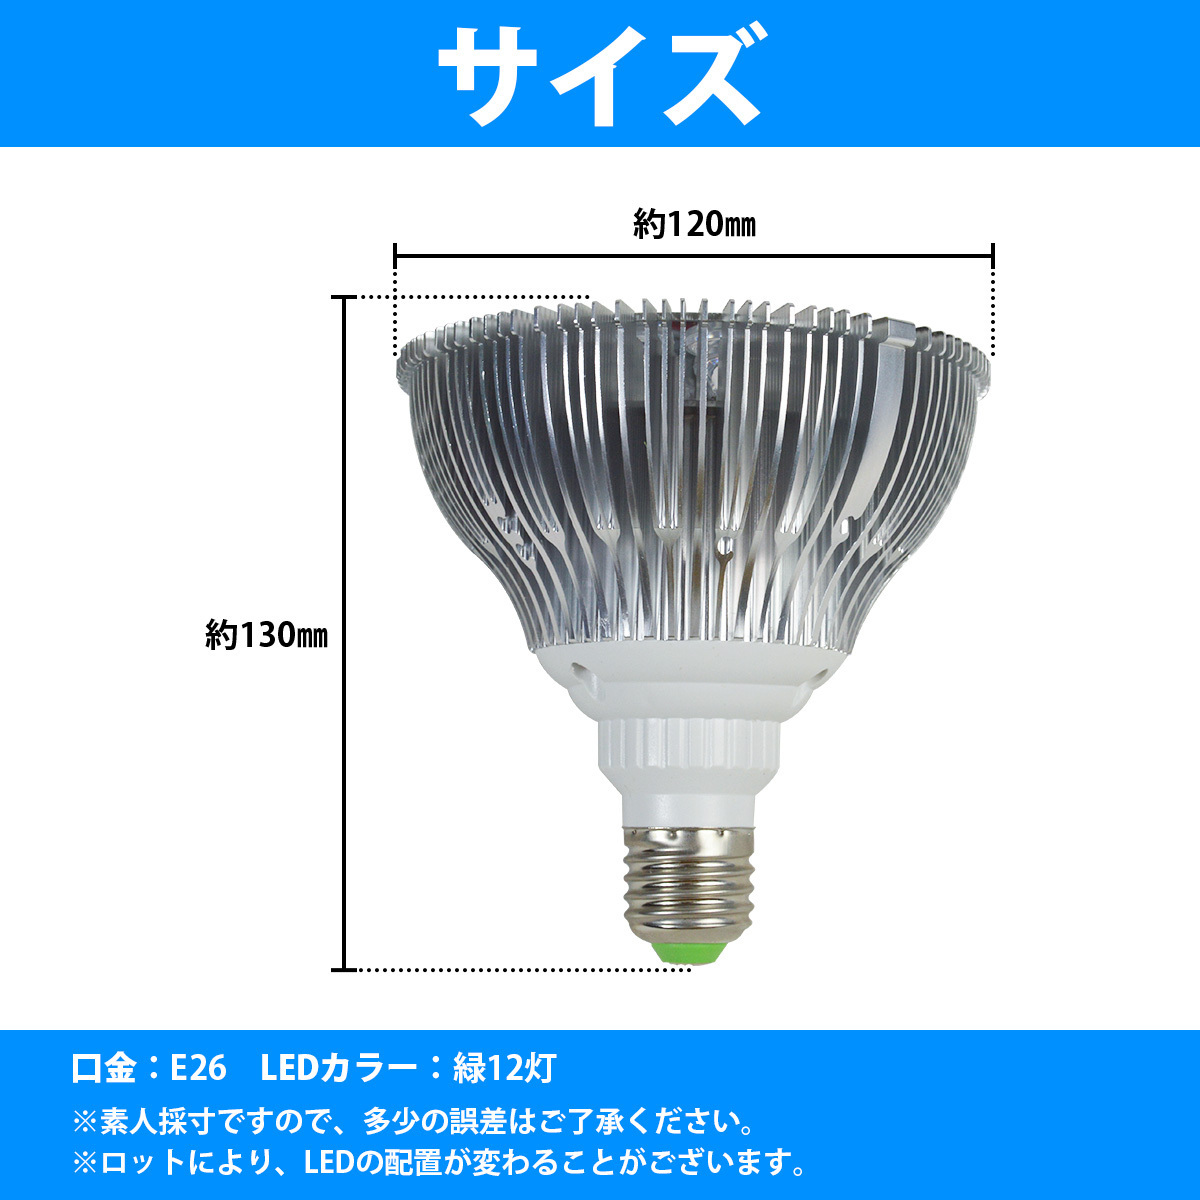 LED 電球 スポットライト 24W(2W×12)シアン12灯 水槽 照明 E26 LEDスポットライト 電気 水草 サンゴ 熱帯魚 観賞魚 植物育成_画像5